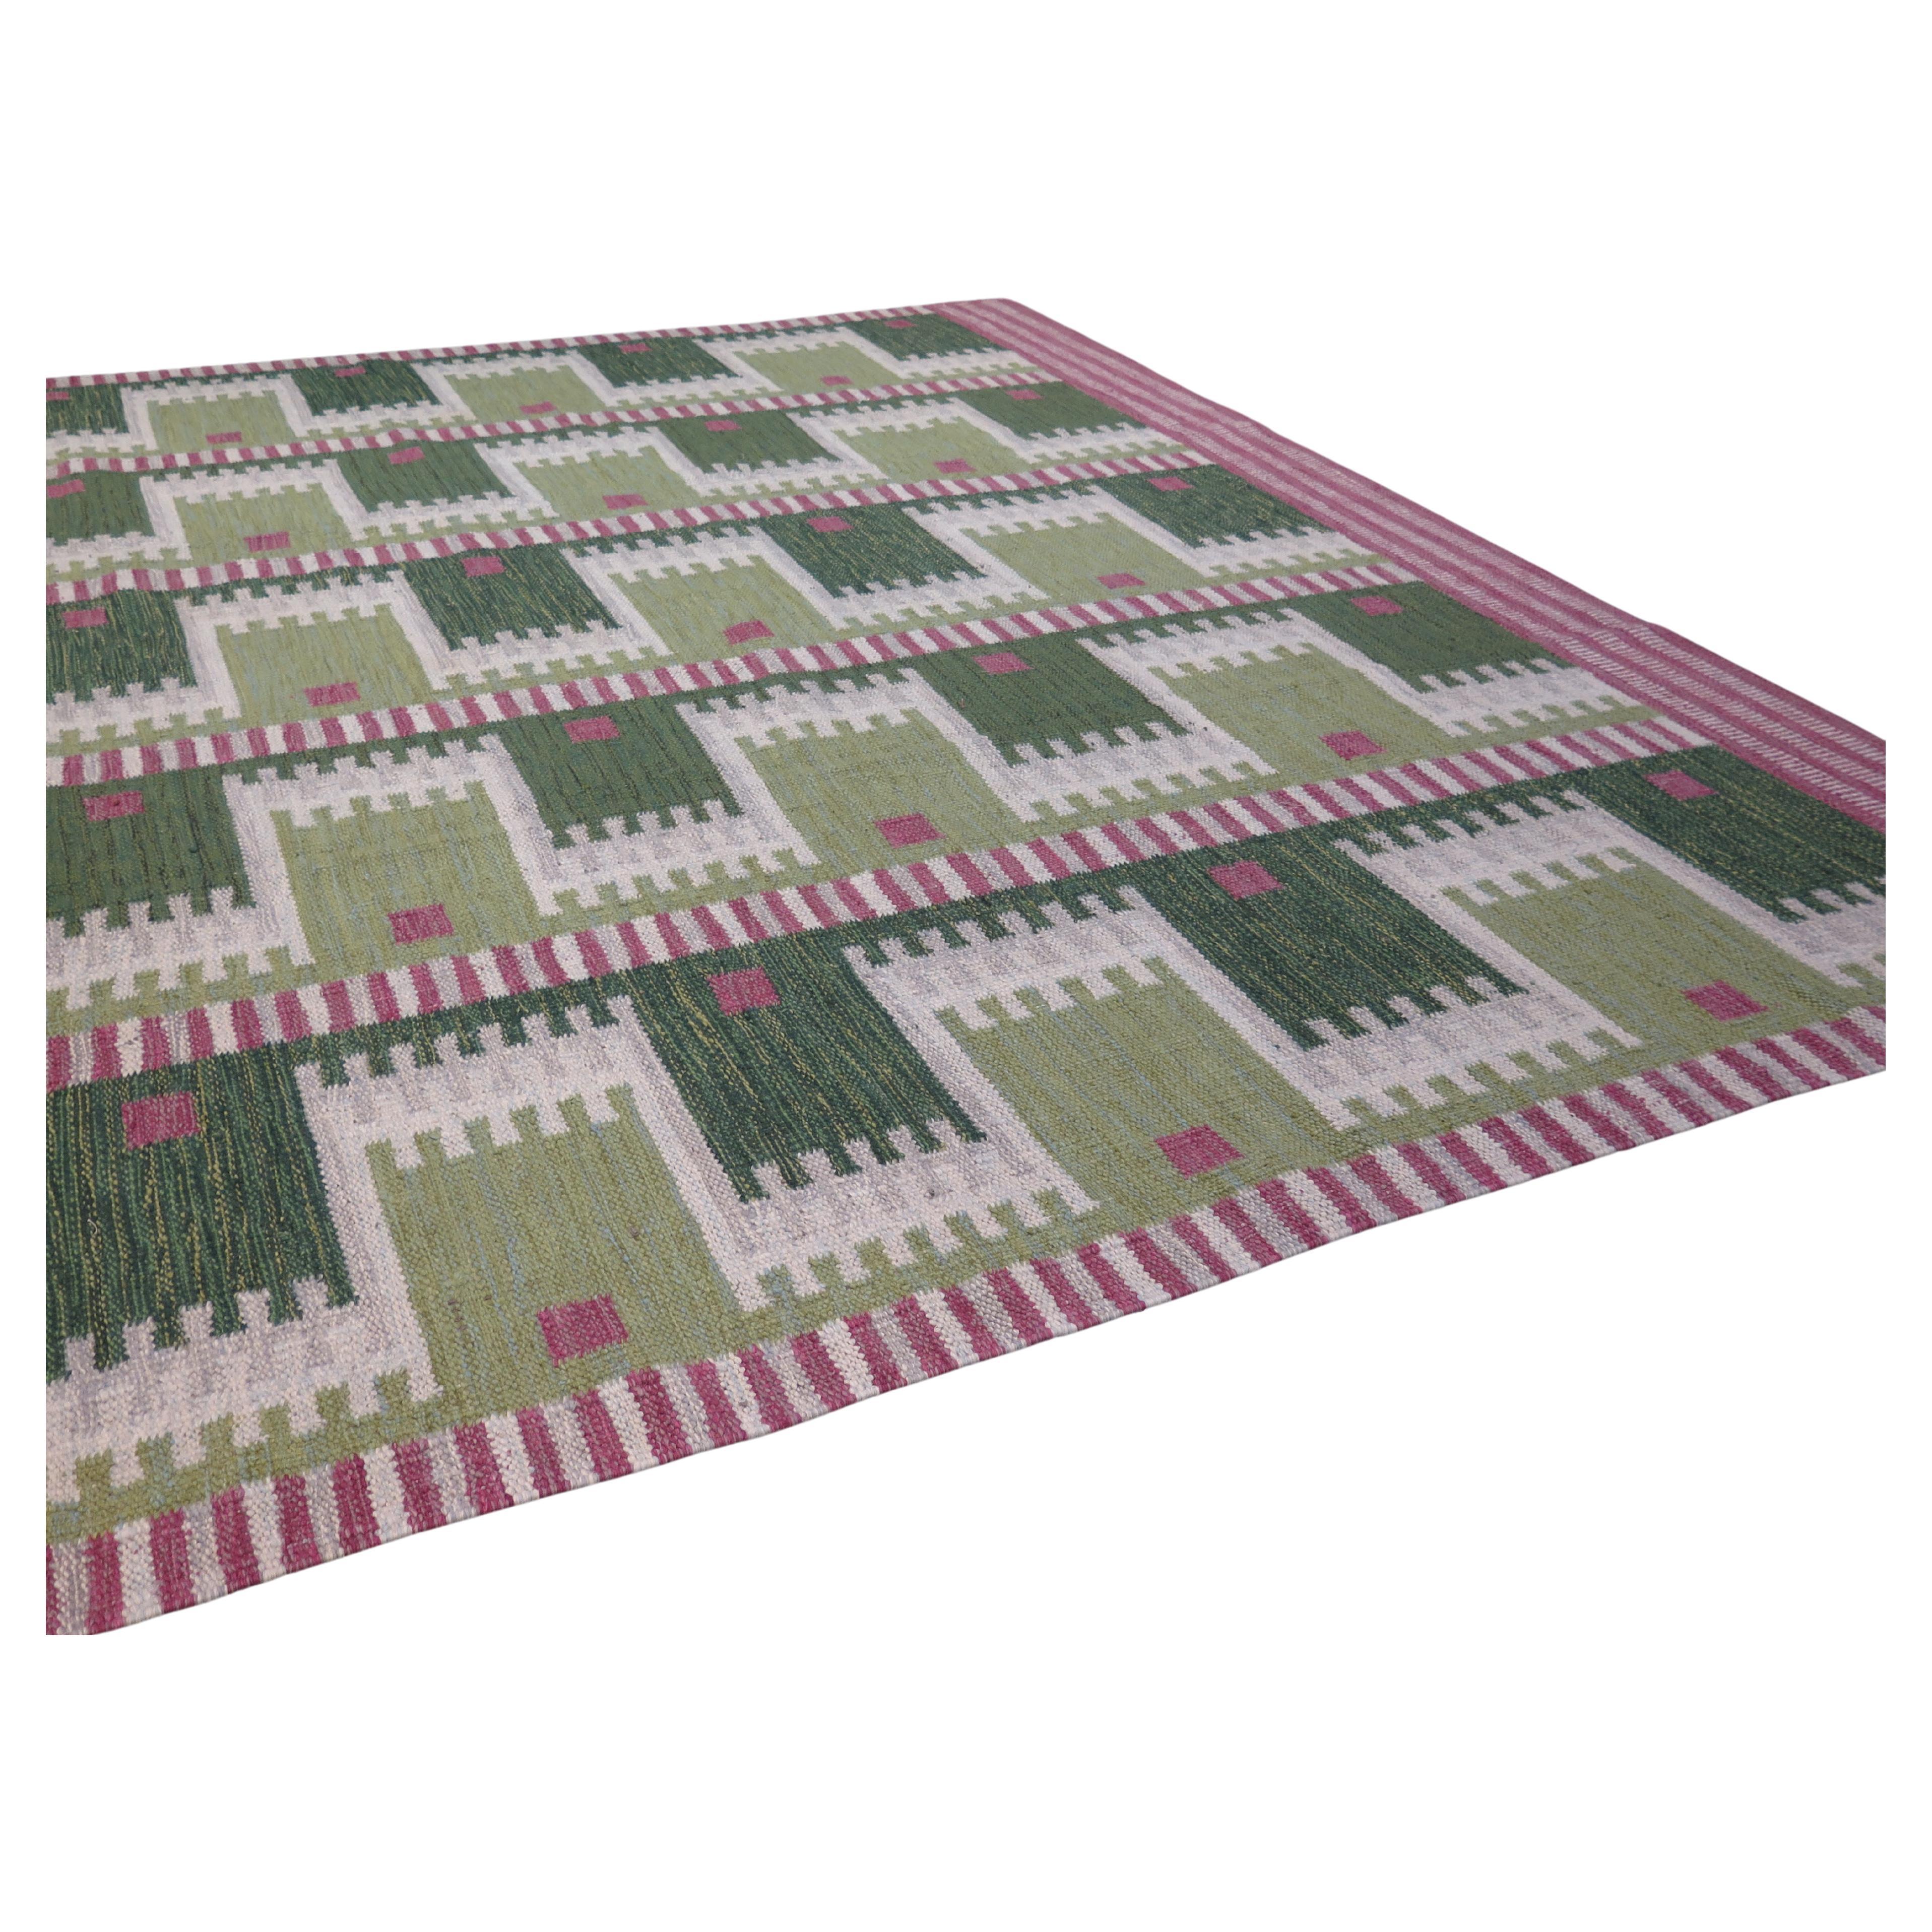 Striking Swedish Design Contemporary Flatweave Carpet For Sale